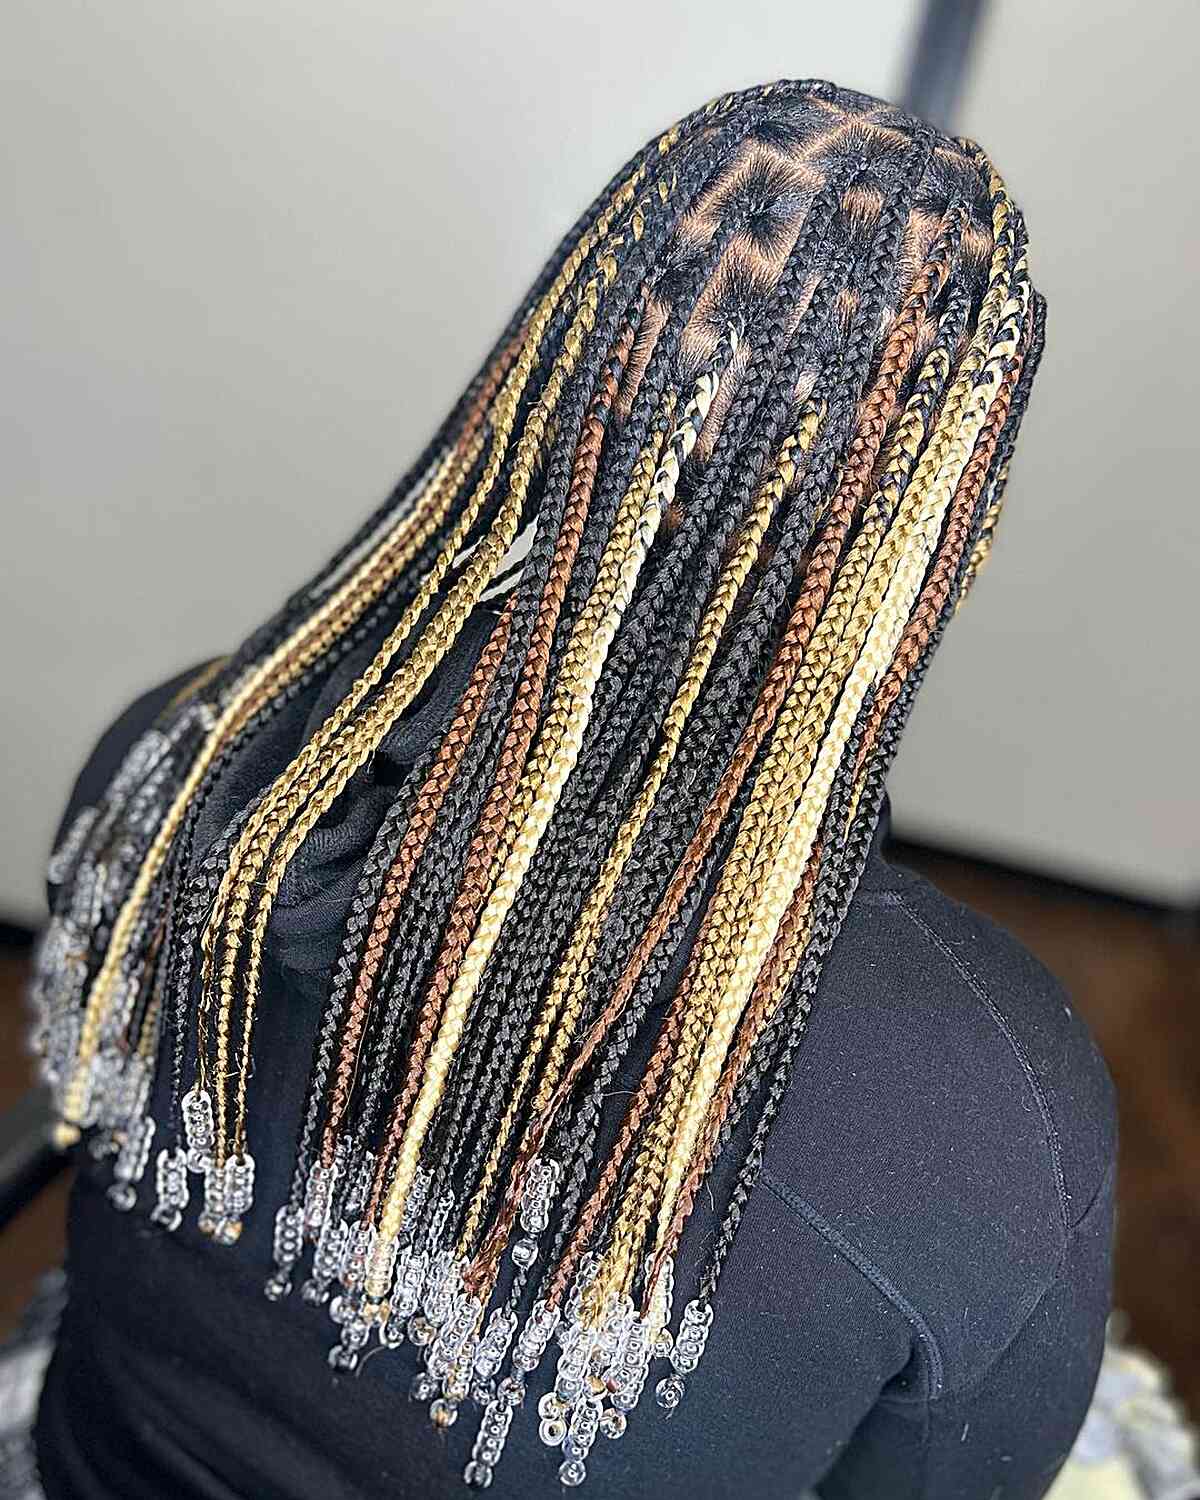 Long Box Braids with Beads